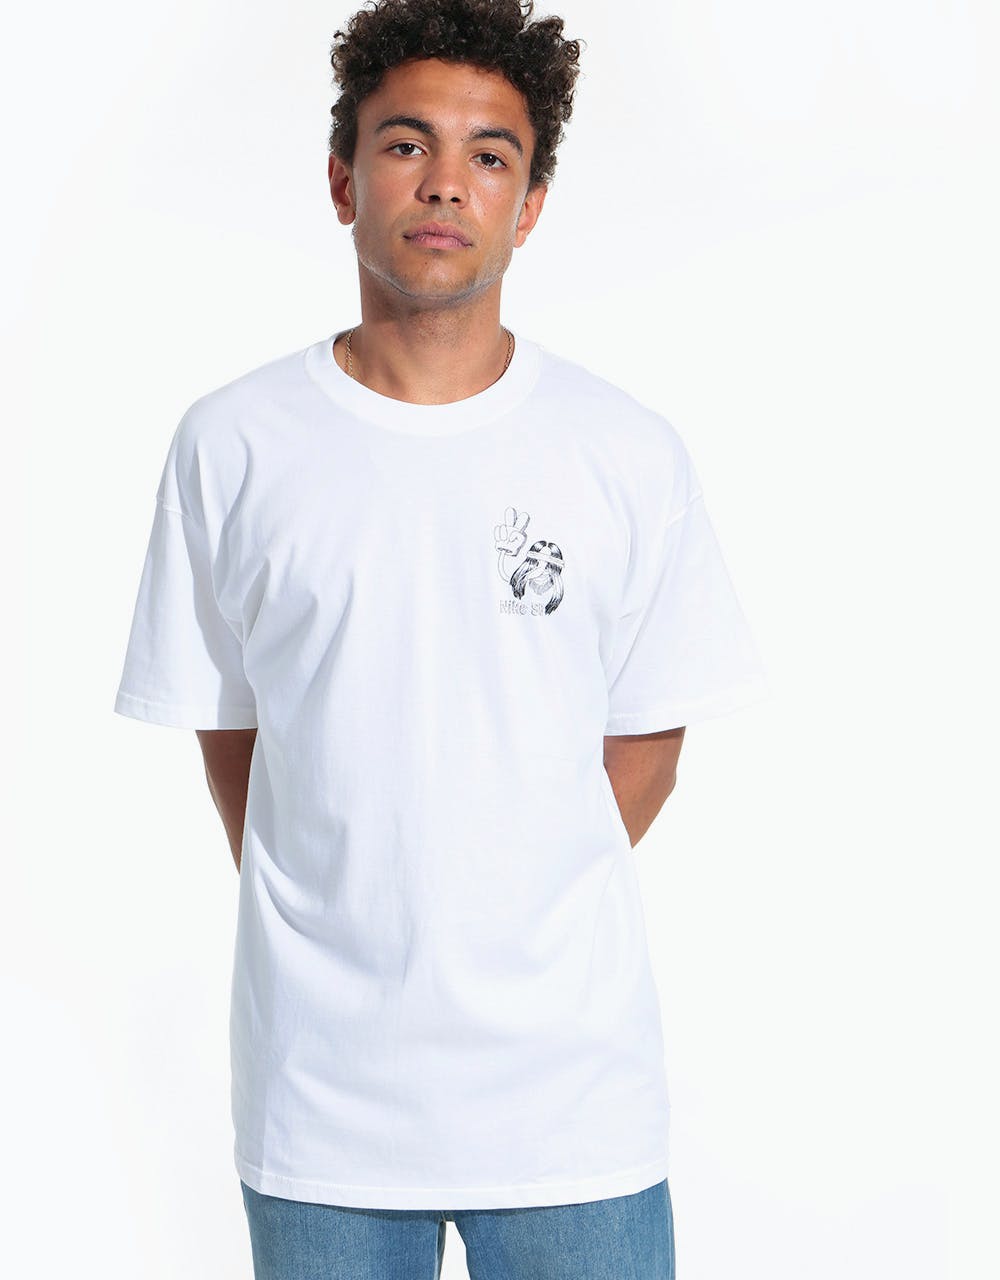 Nike SB Duder T-Shirt - White/Black